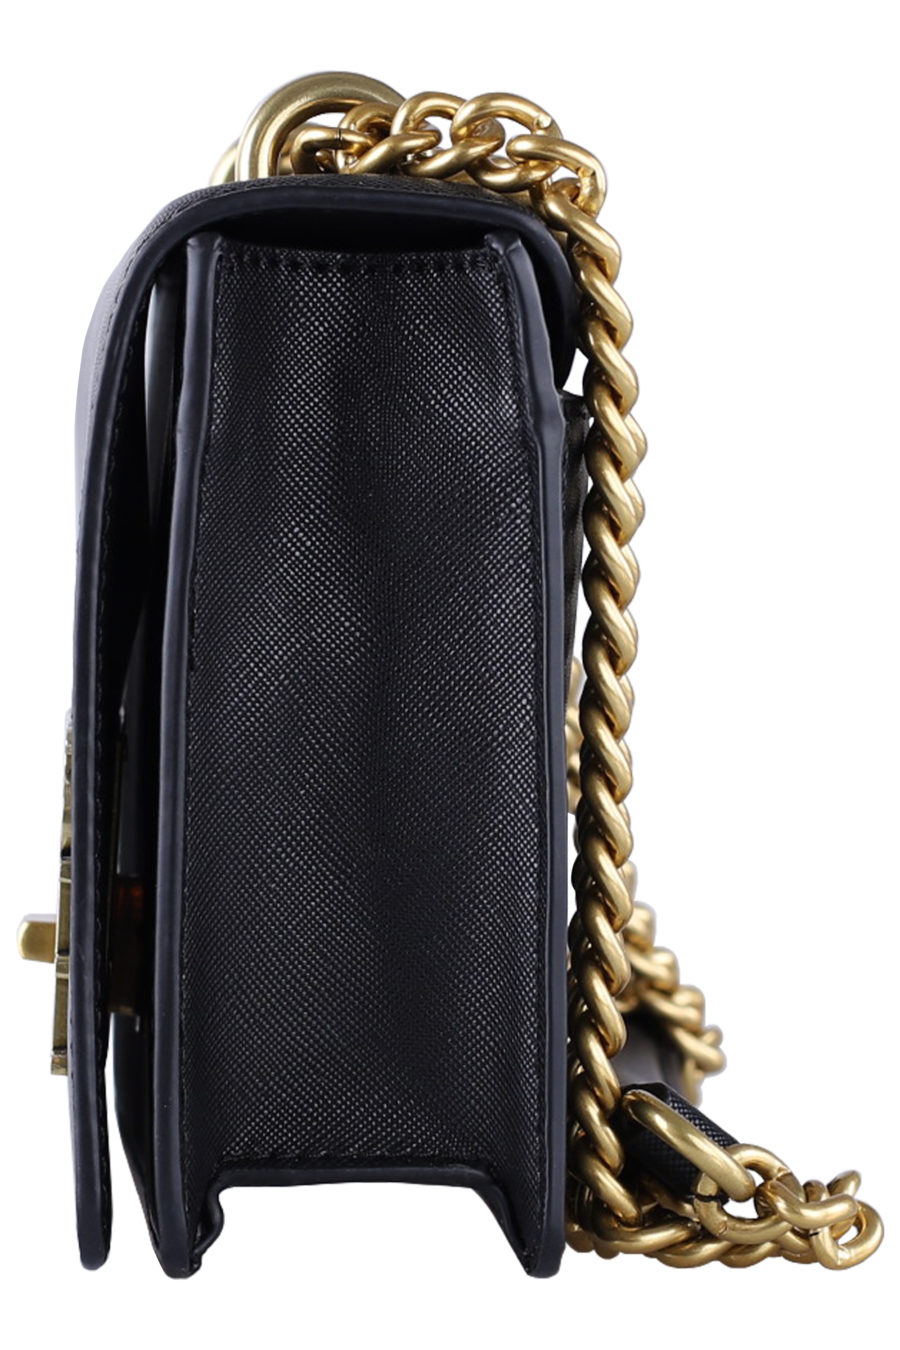 Black shoulder bag with gold logo - 8ec9093389416fa6f7cb2b825c4efc7ca00eb151